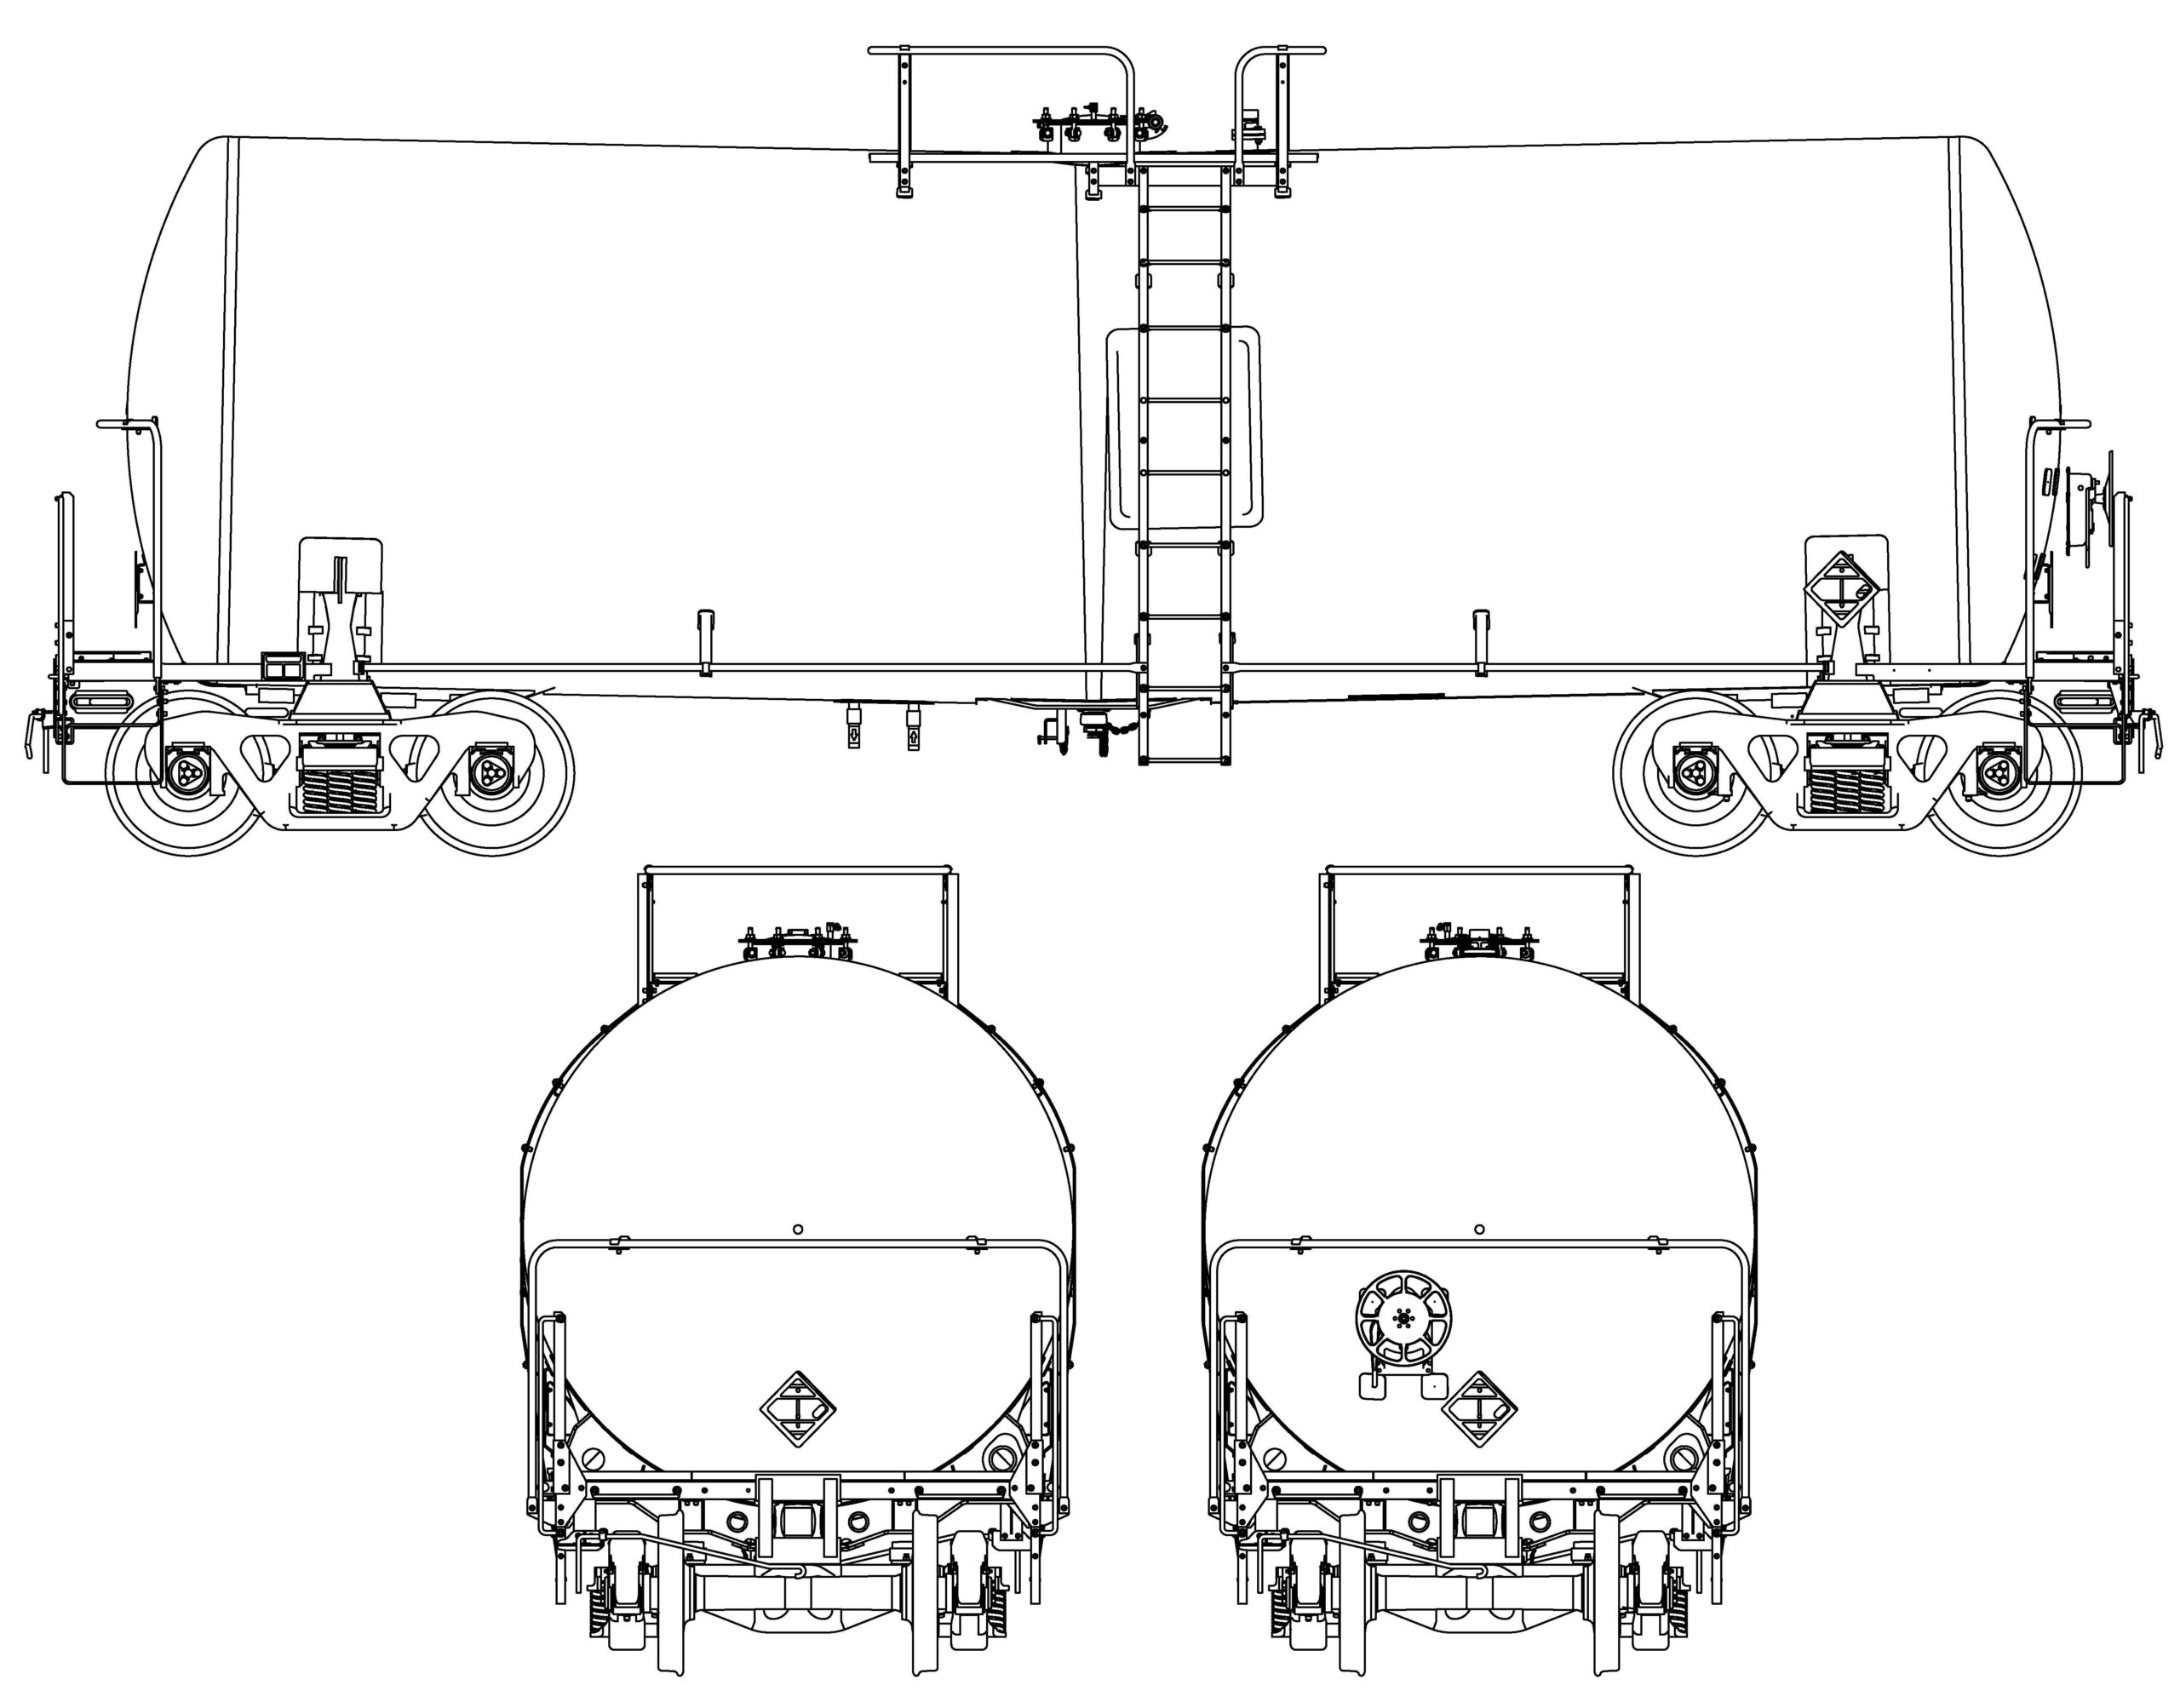 19600 Gallon Corn Syrup tank car technical drawing.